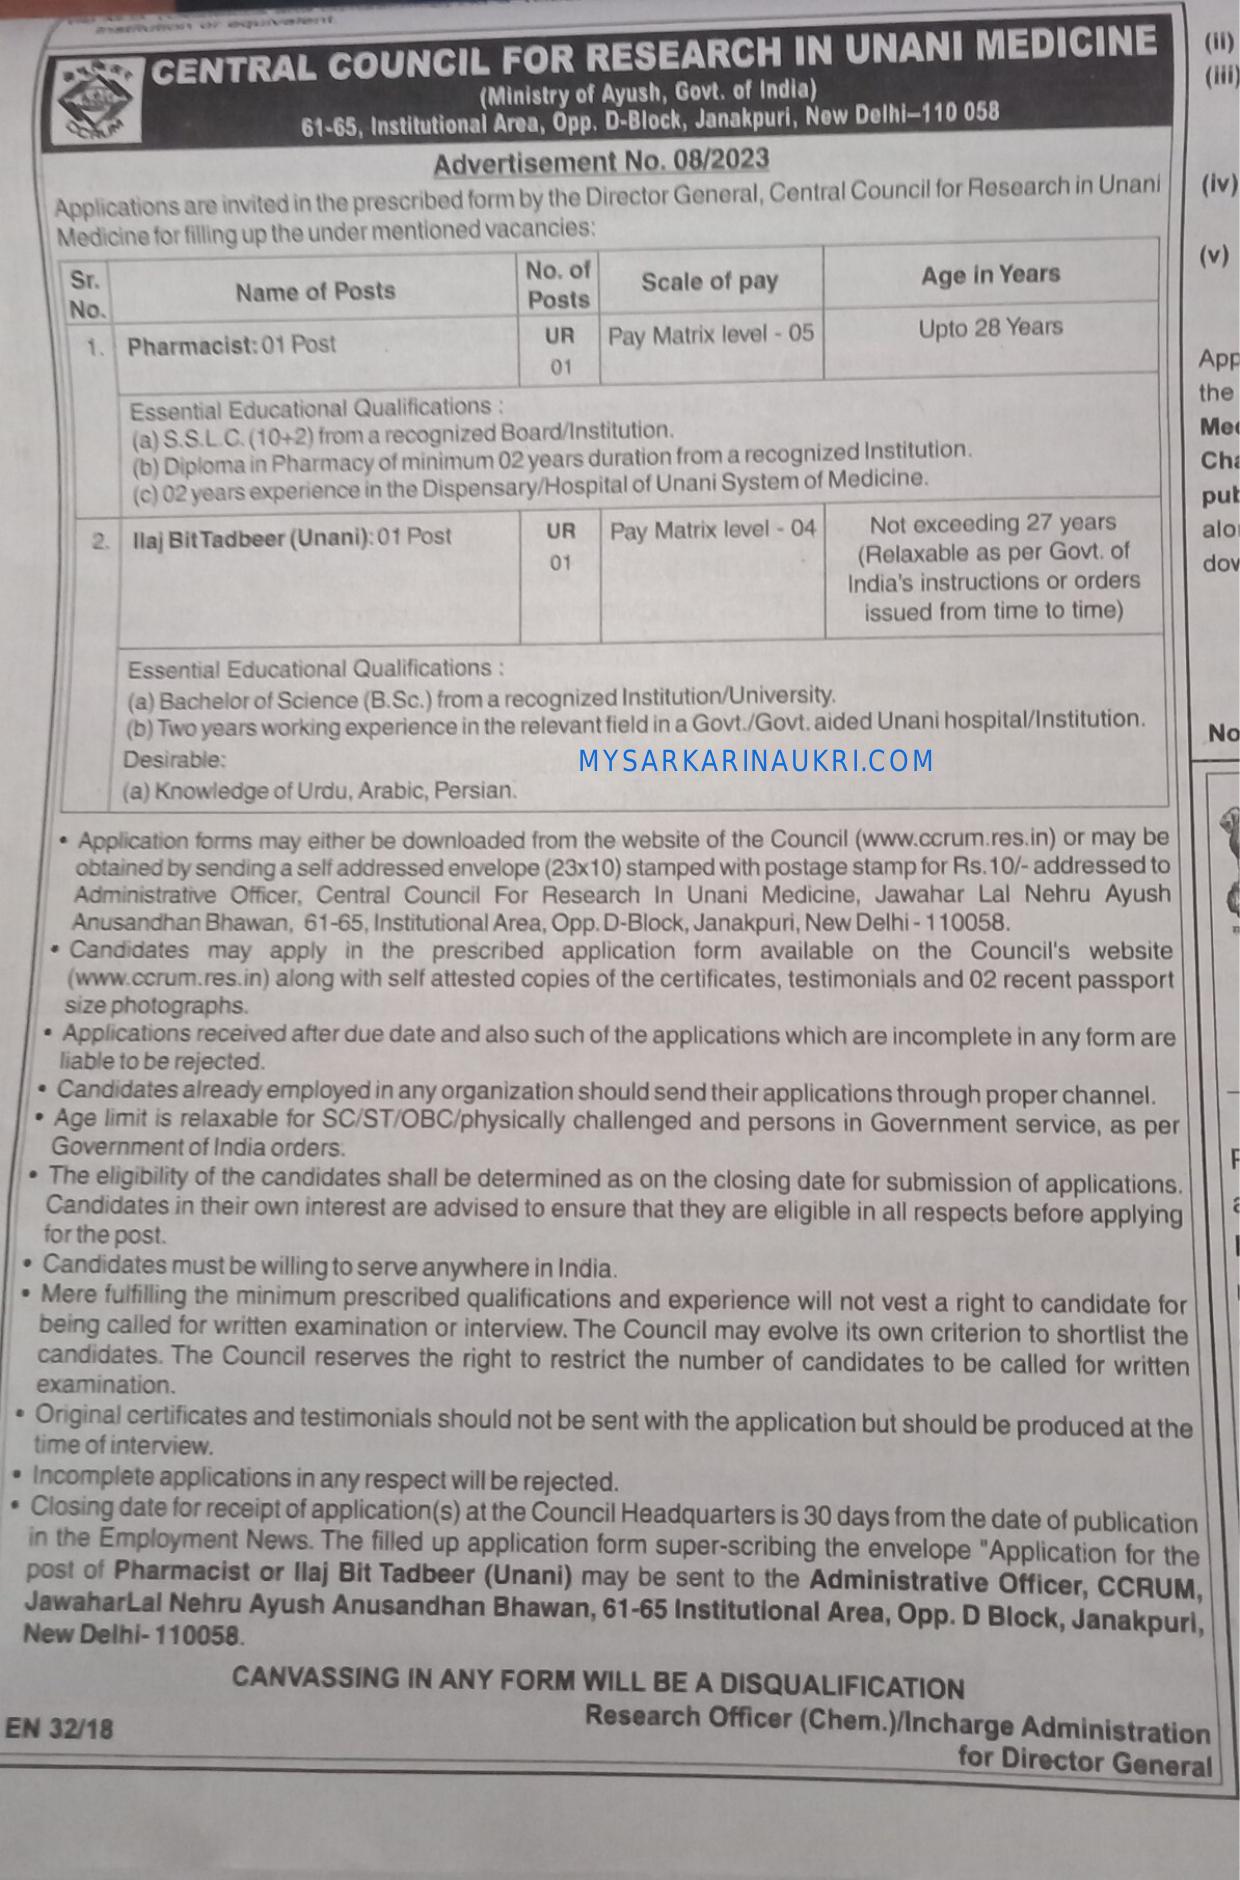 CCRUM Pharmacist, IIaj Bit Tadbeer (Unani) Recruitment 2023 - Page 1